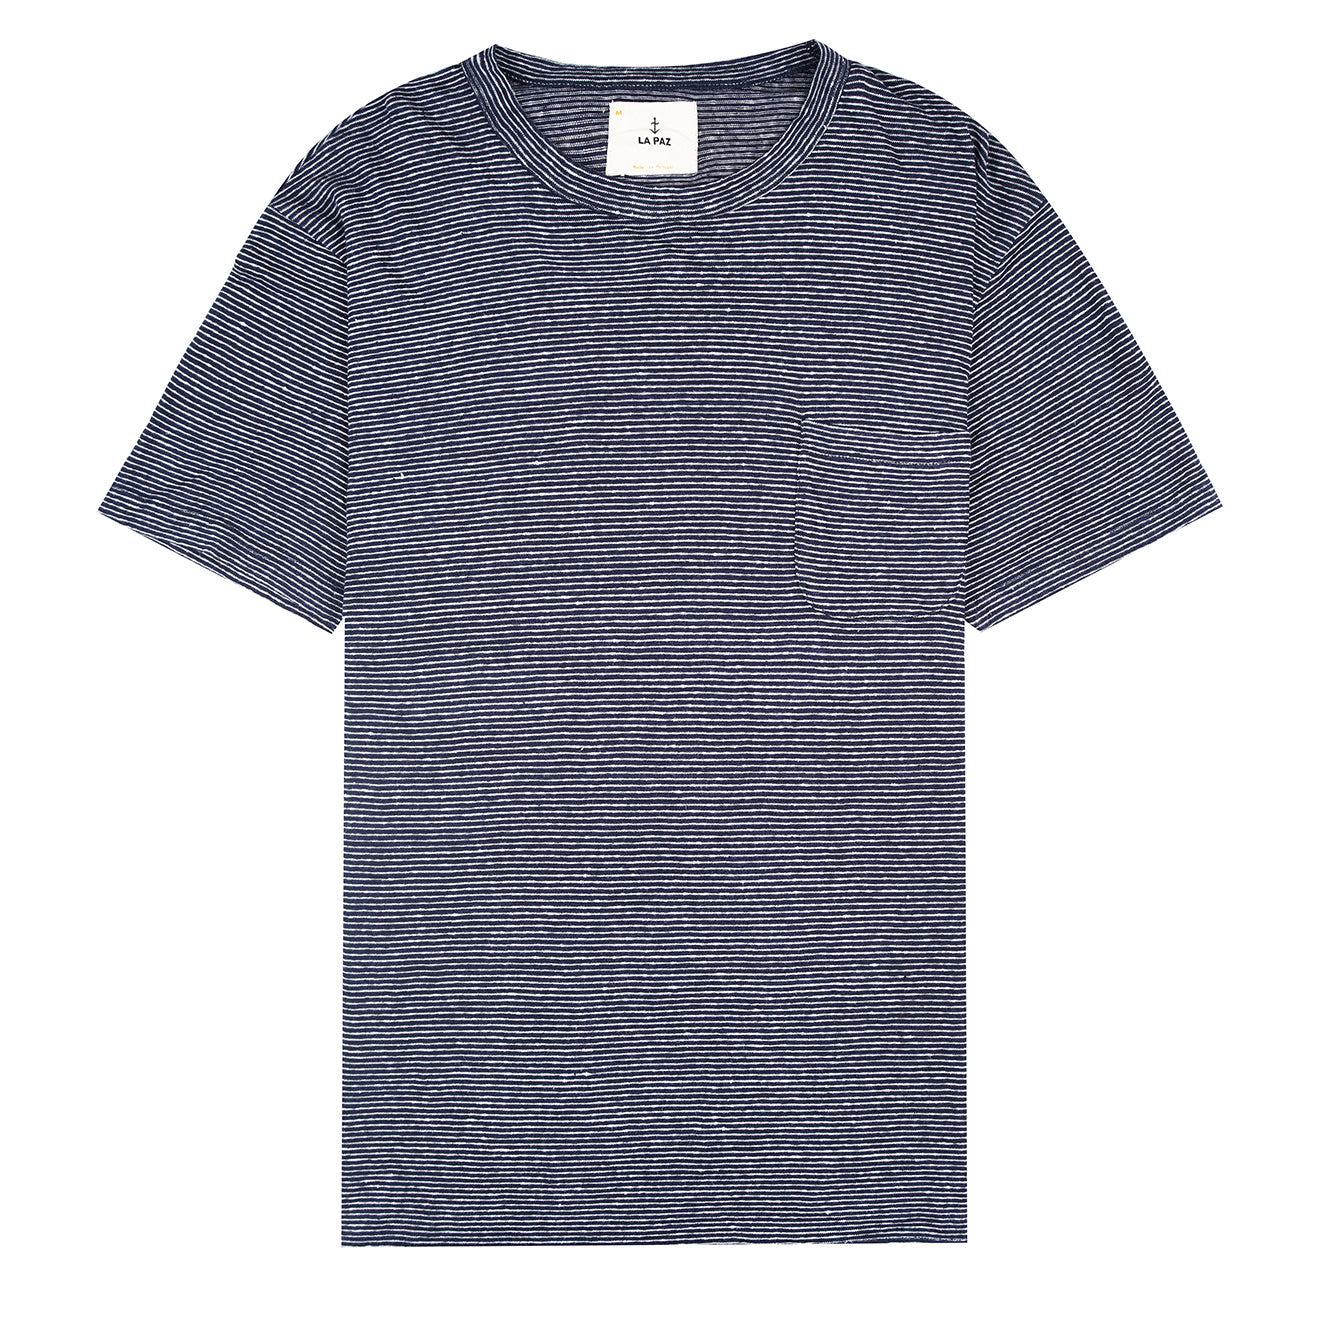 La Paz Pocket T-Shirt Dark Navy / Mesc Stripes | Yards Store Menswear